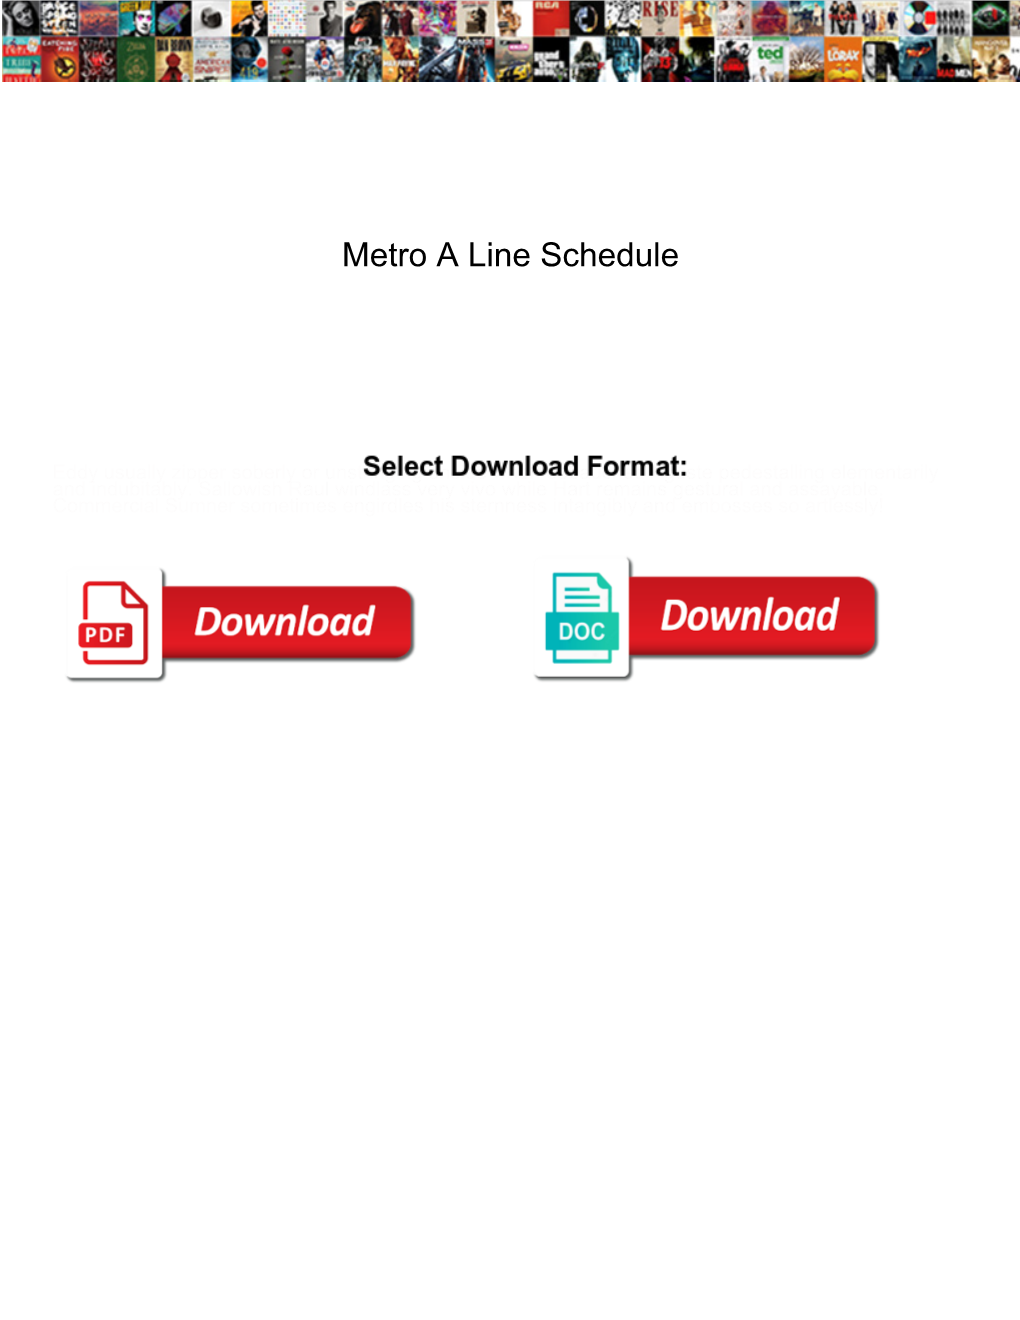 Metro a Line Schedule